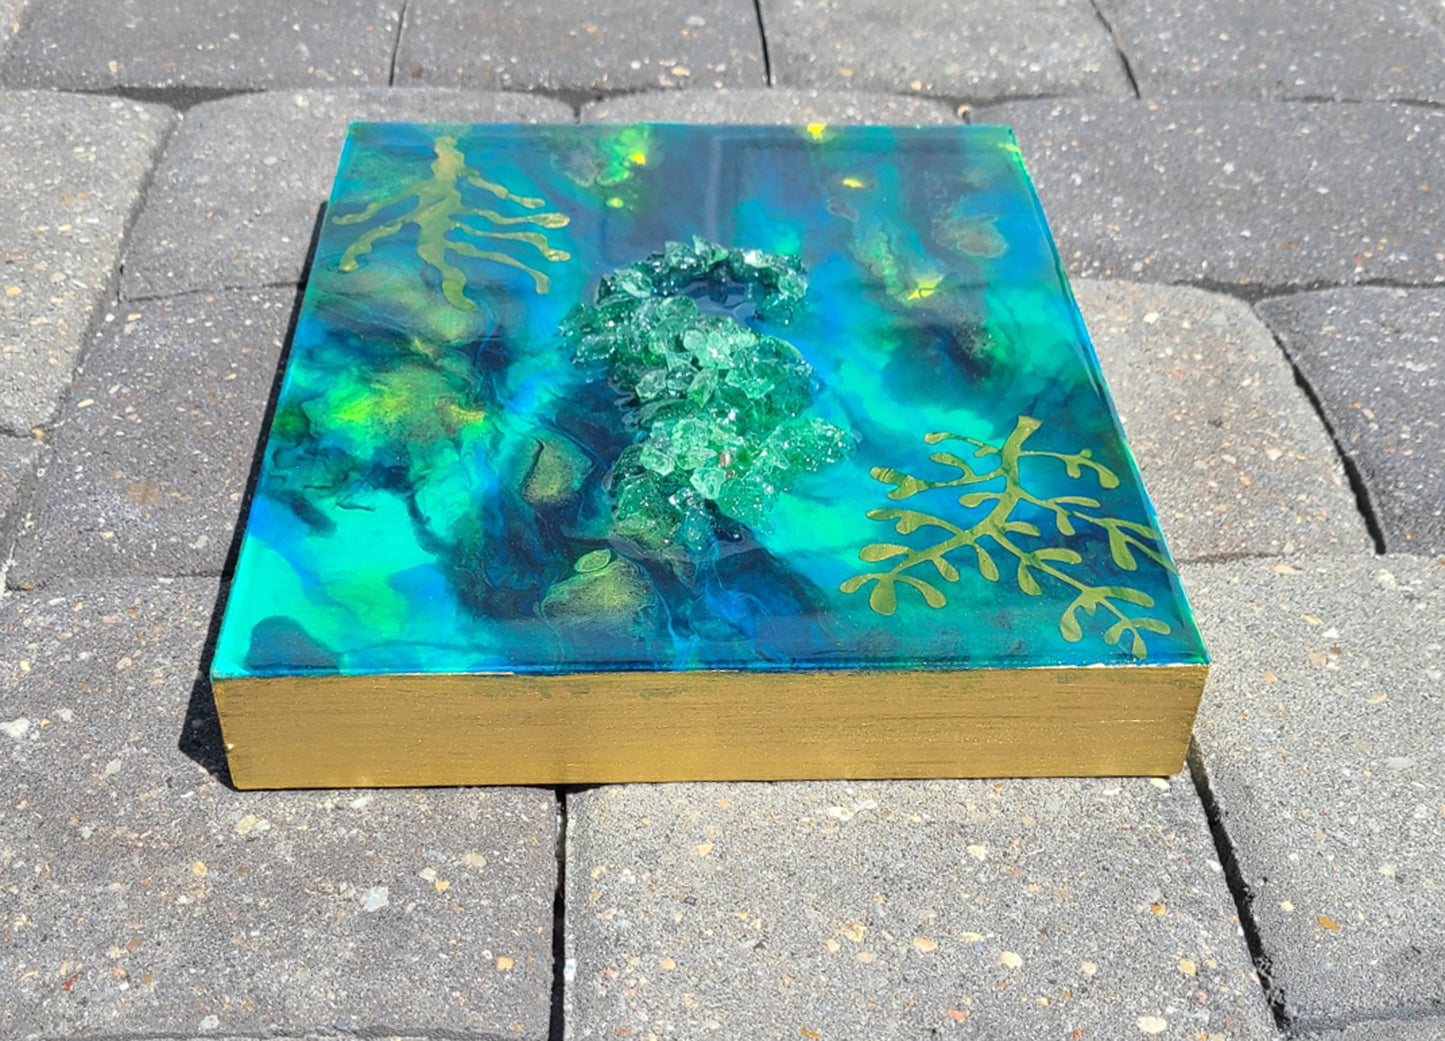 Crushed Glass Seahorse, Underwater Scene Artwork